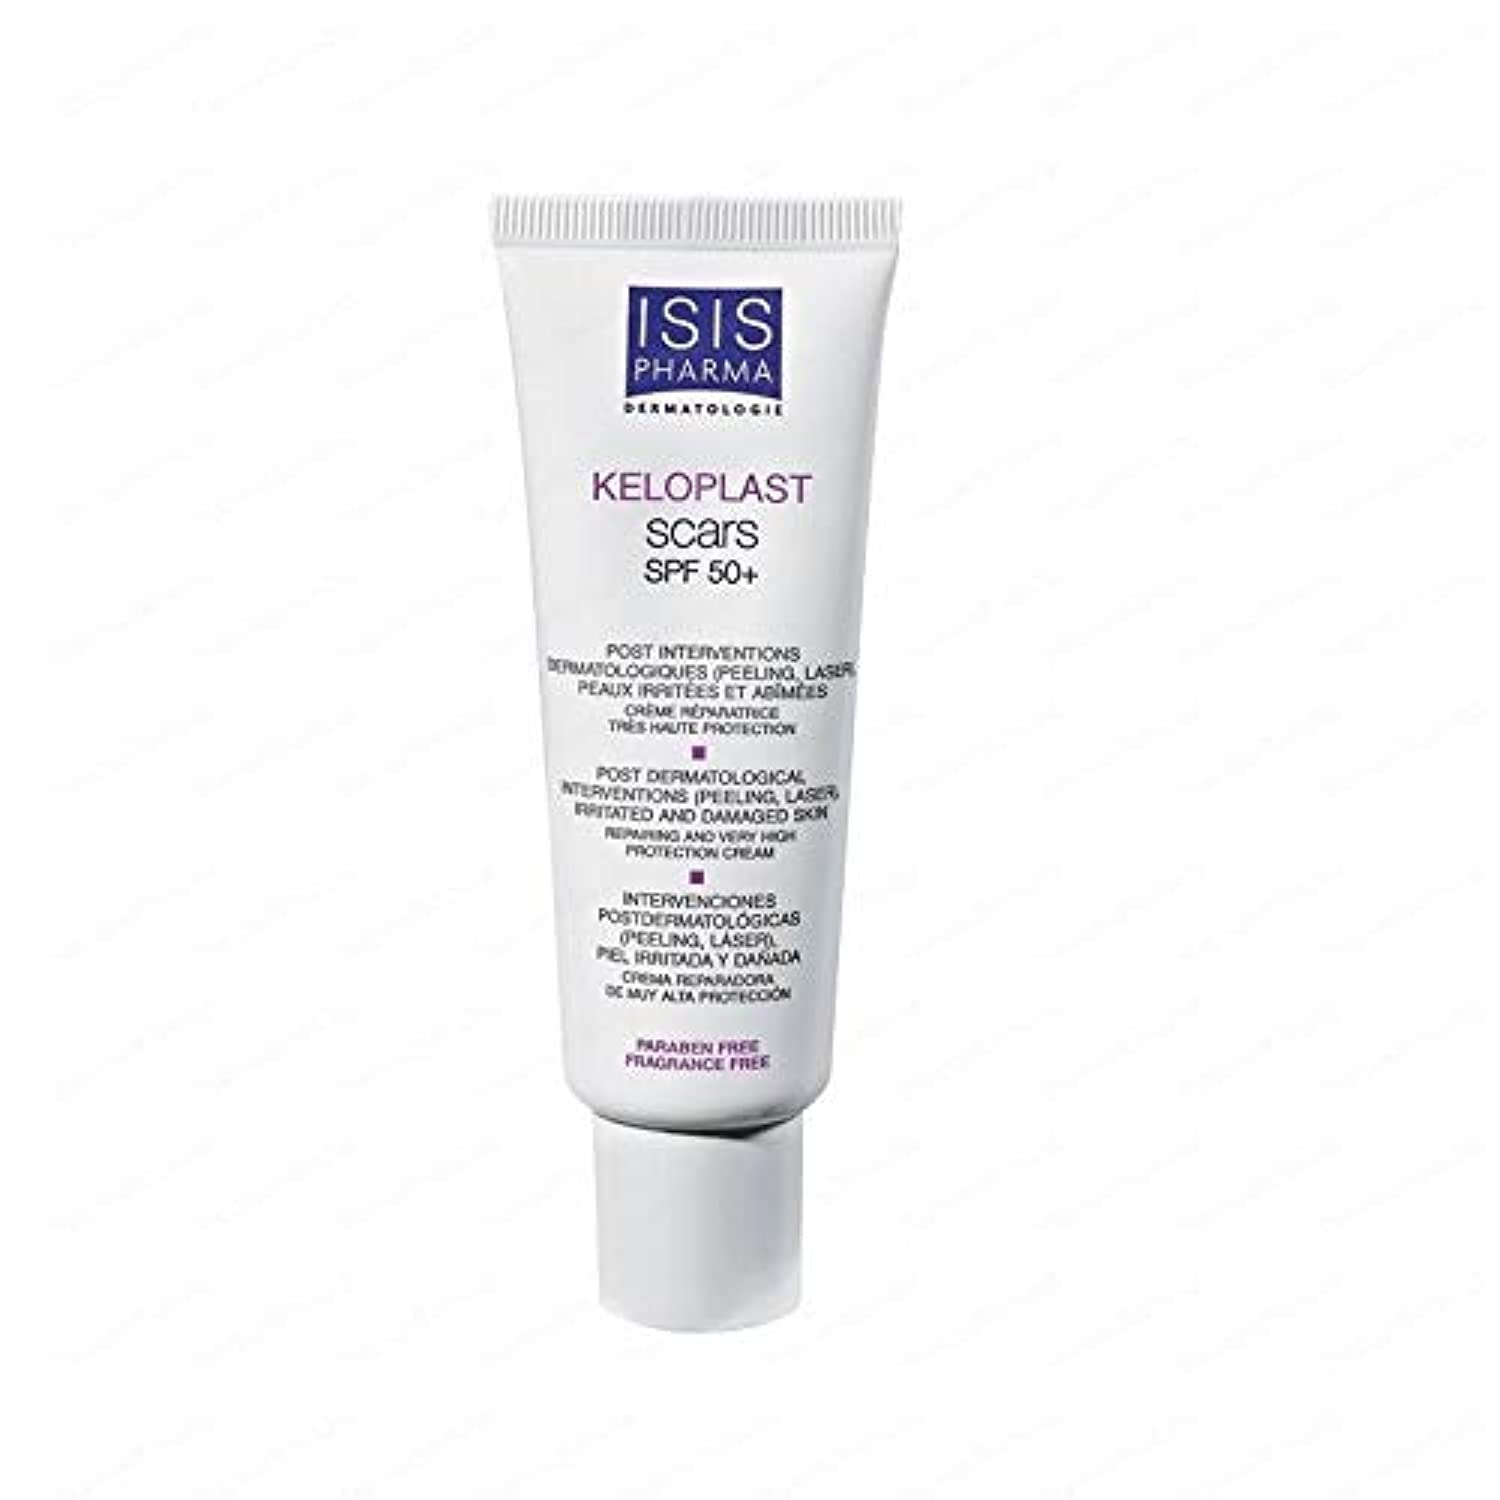 ISIS Pharma KELOPLAST scars SPF50+ repairing cream 40ml Irritated/Damaged Skin Skin Beauty Gift